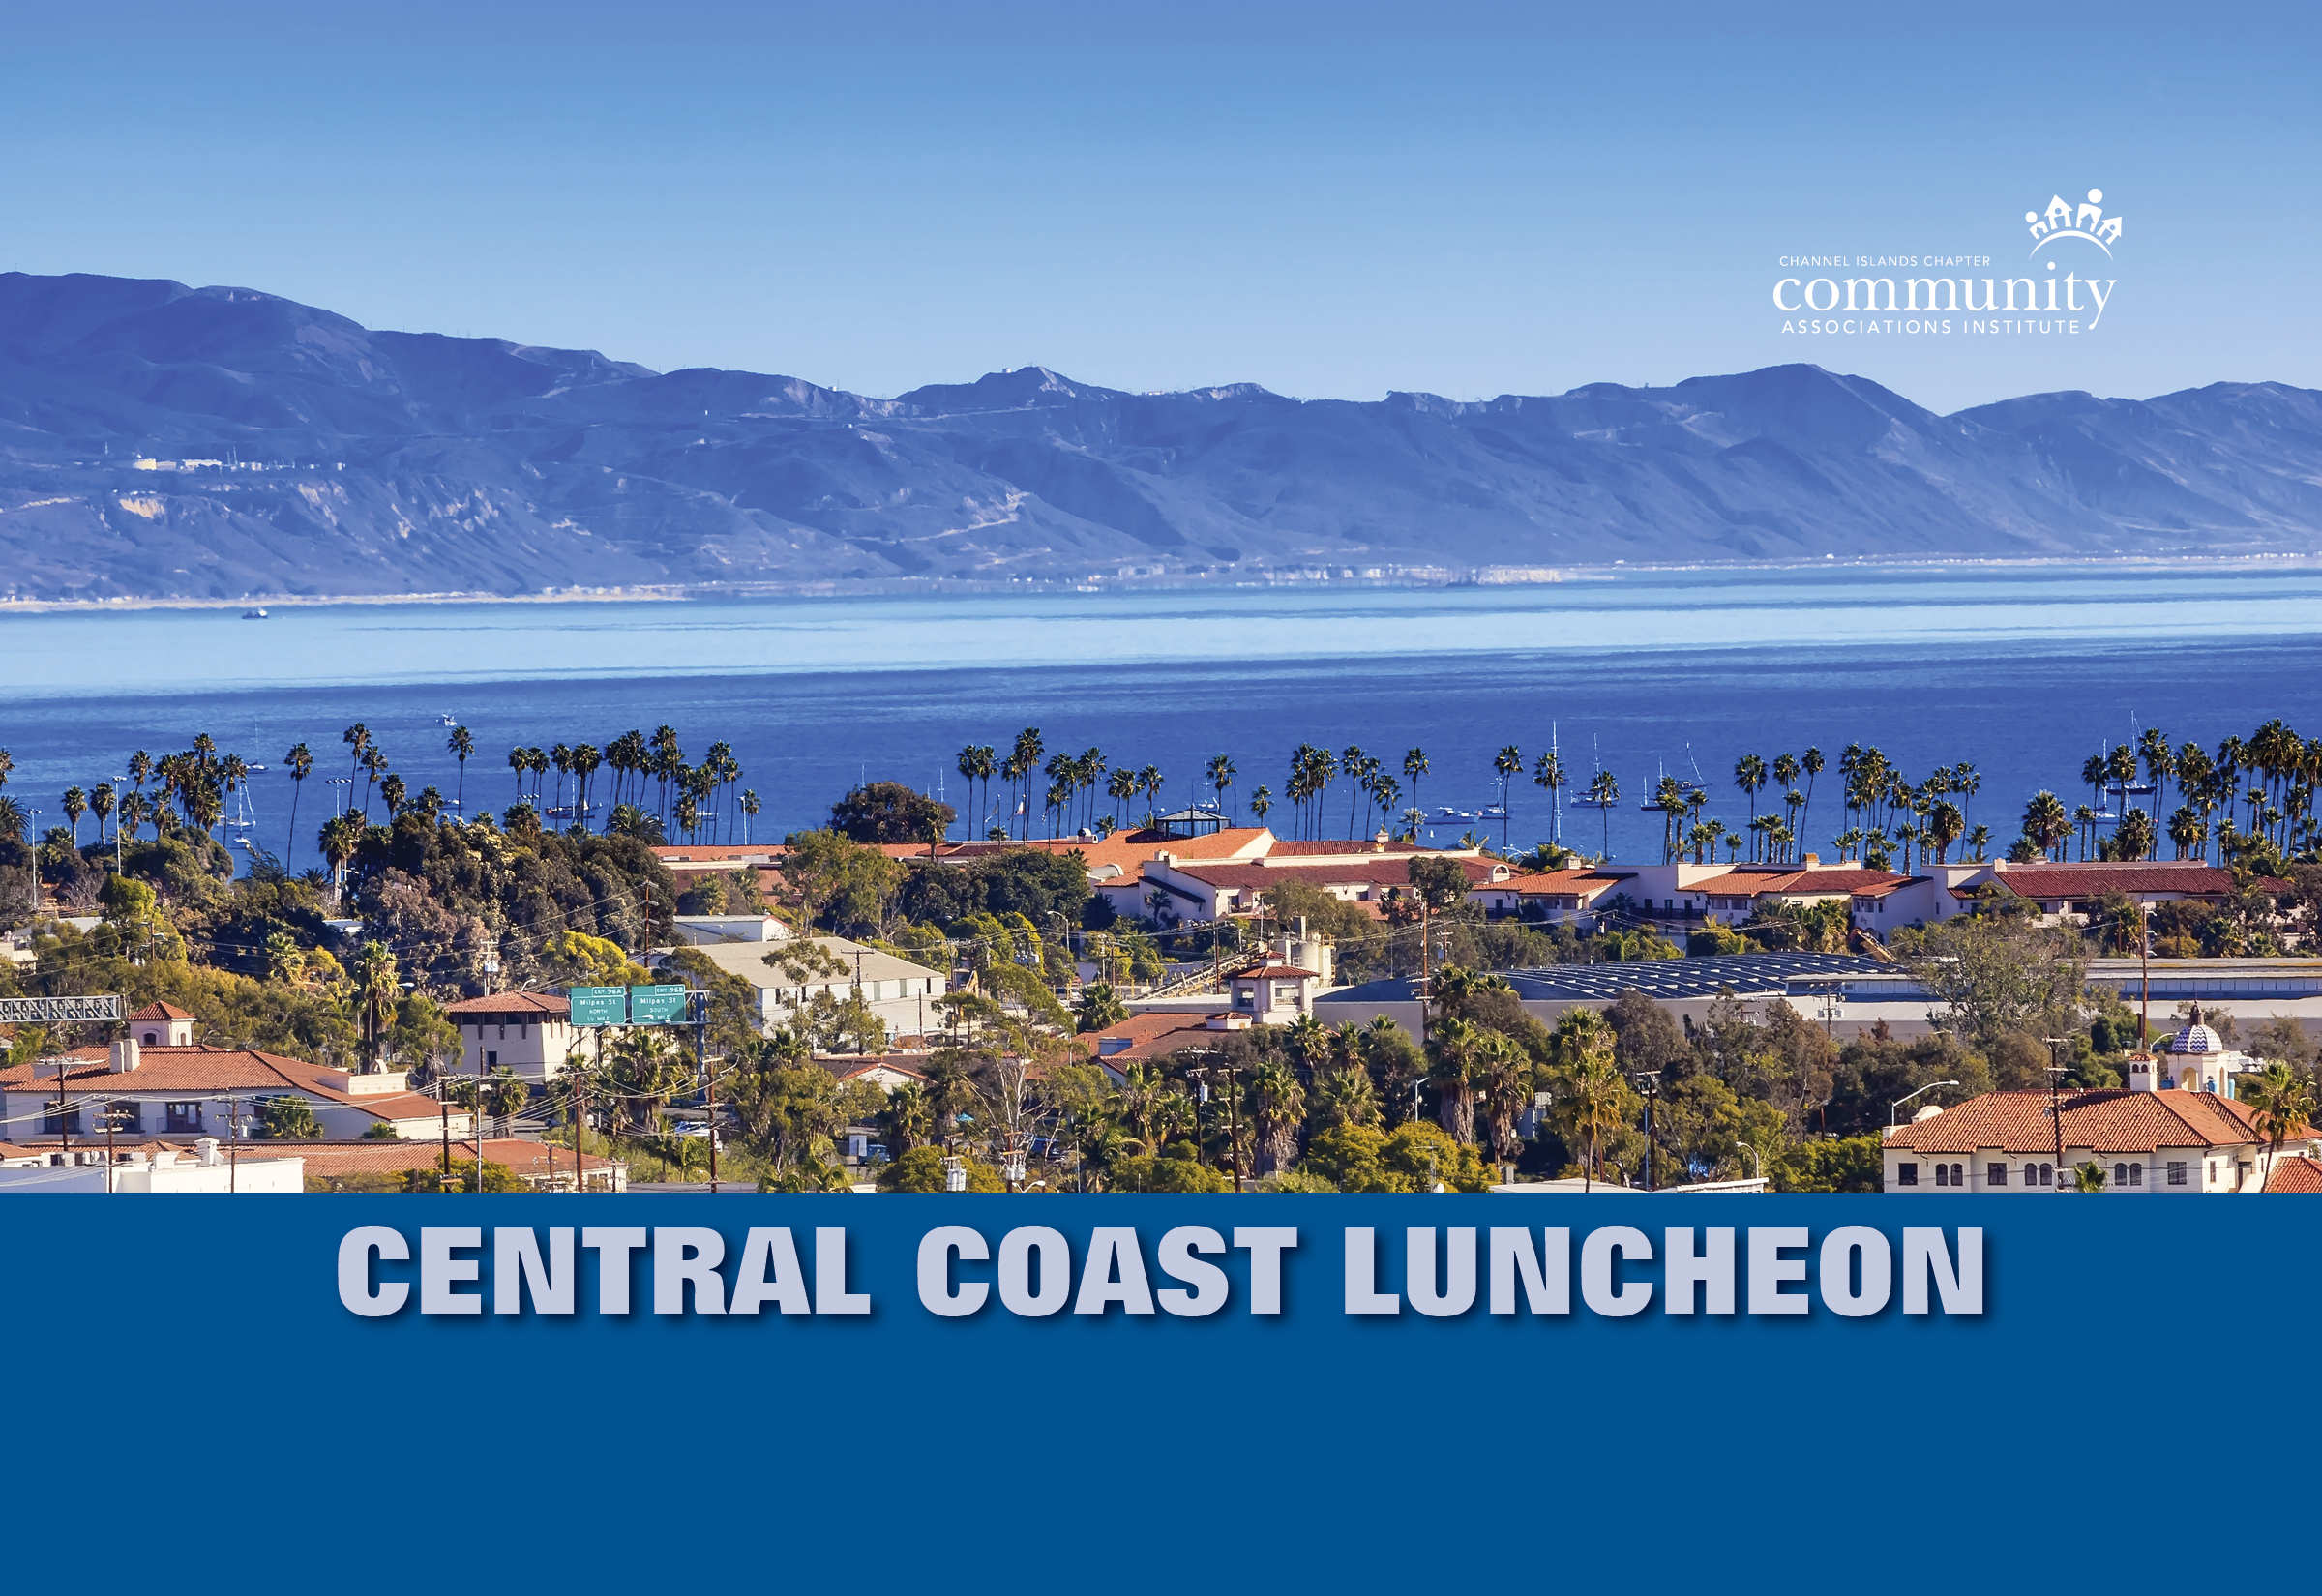 Central Coast Luncheon Program